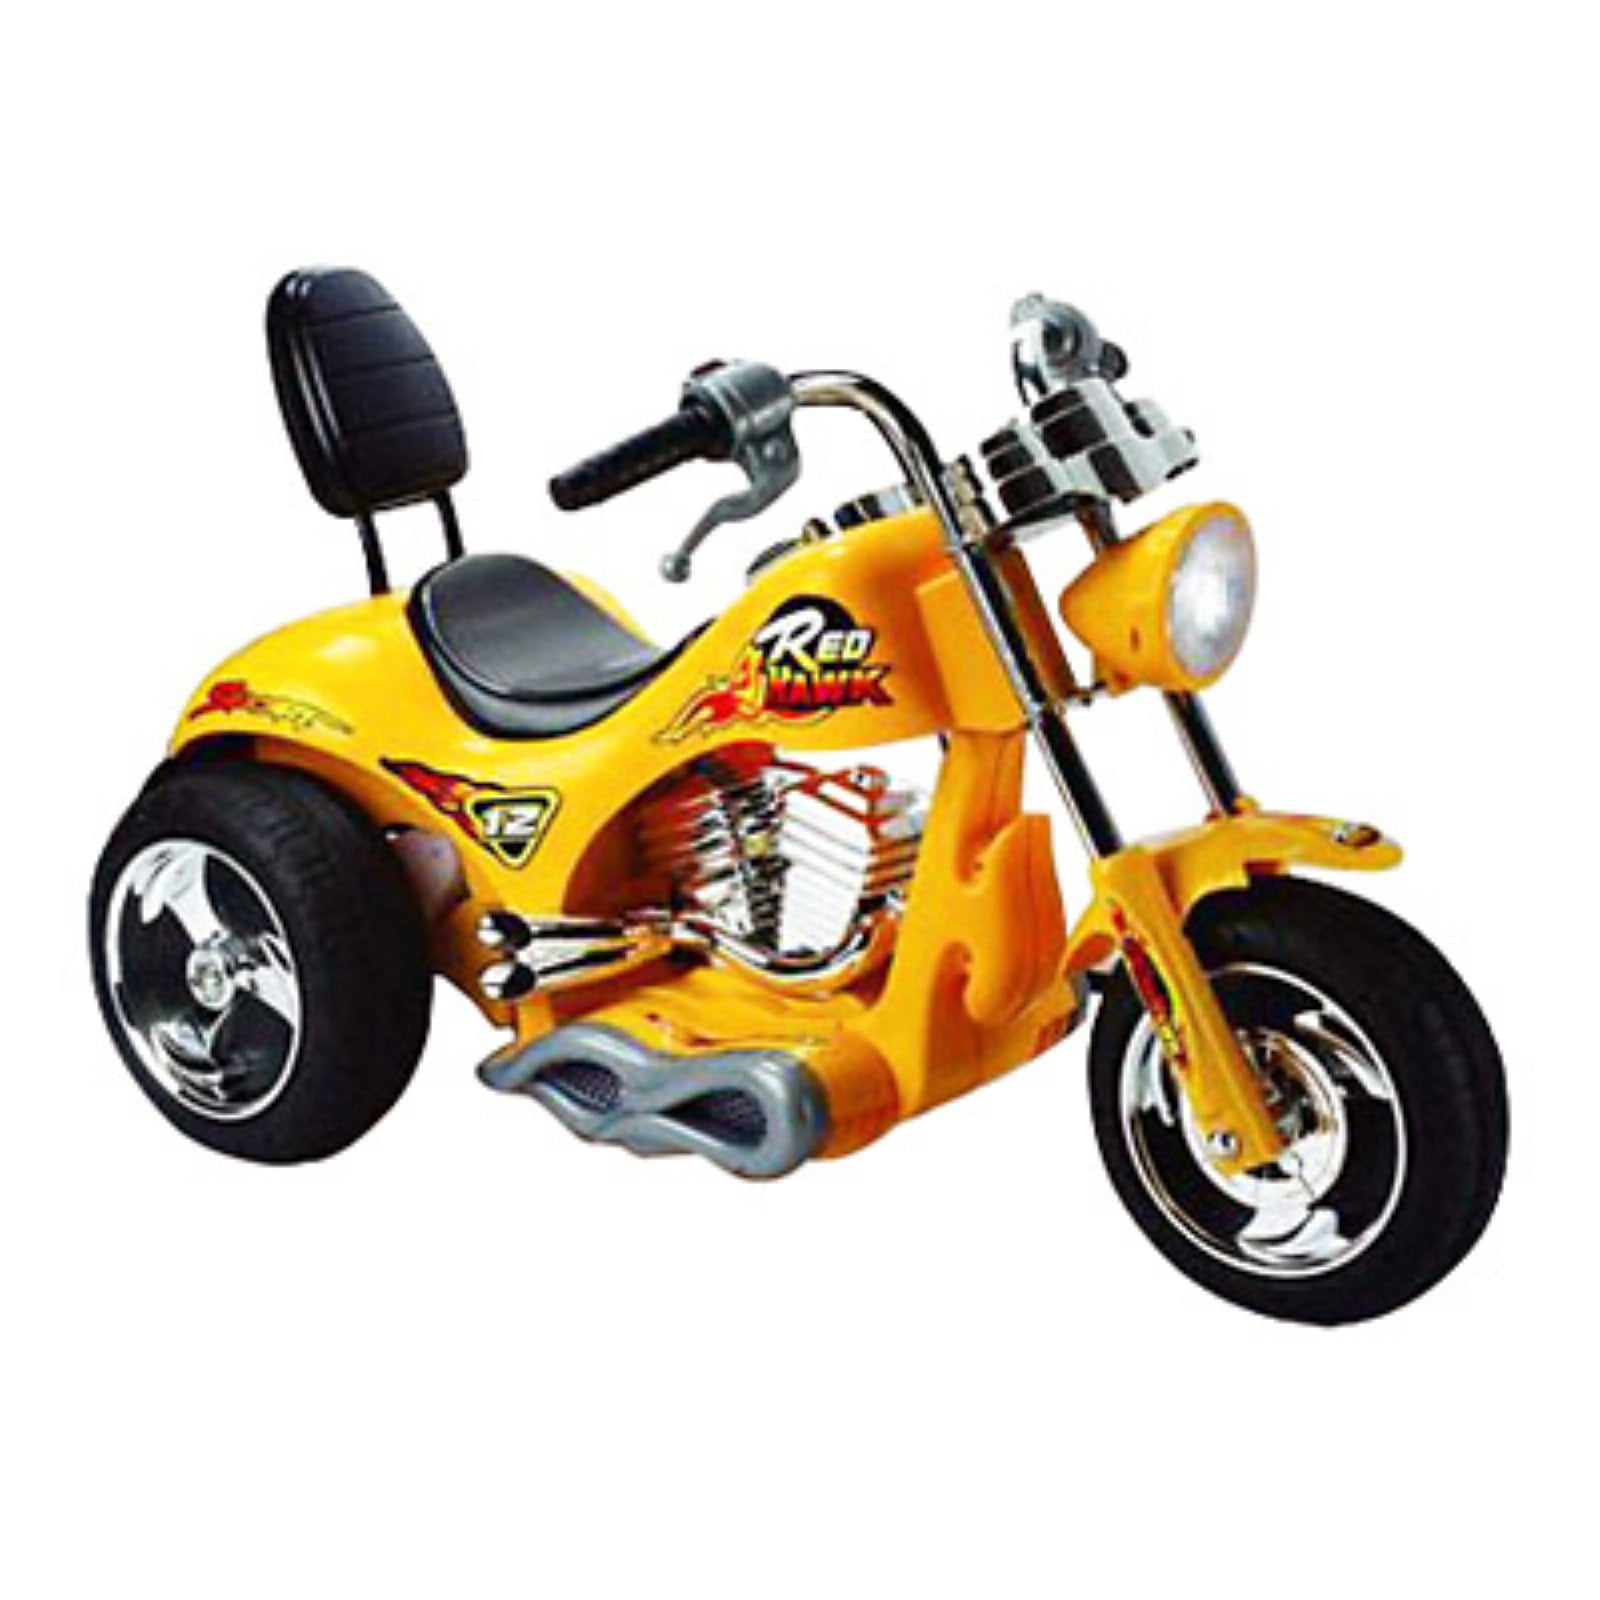 Mini Motos 12V Red Hawk Kids Battery Powered Ride On Motorcycle Yellow - Walmart.com